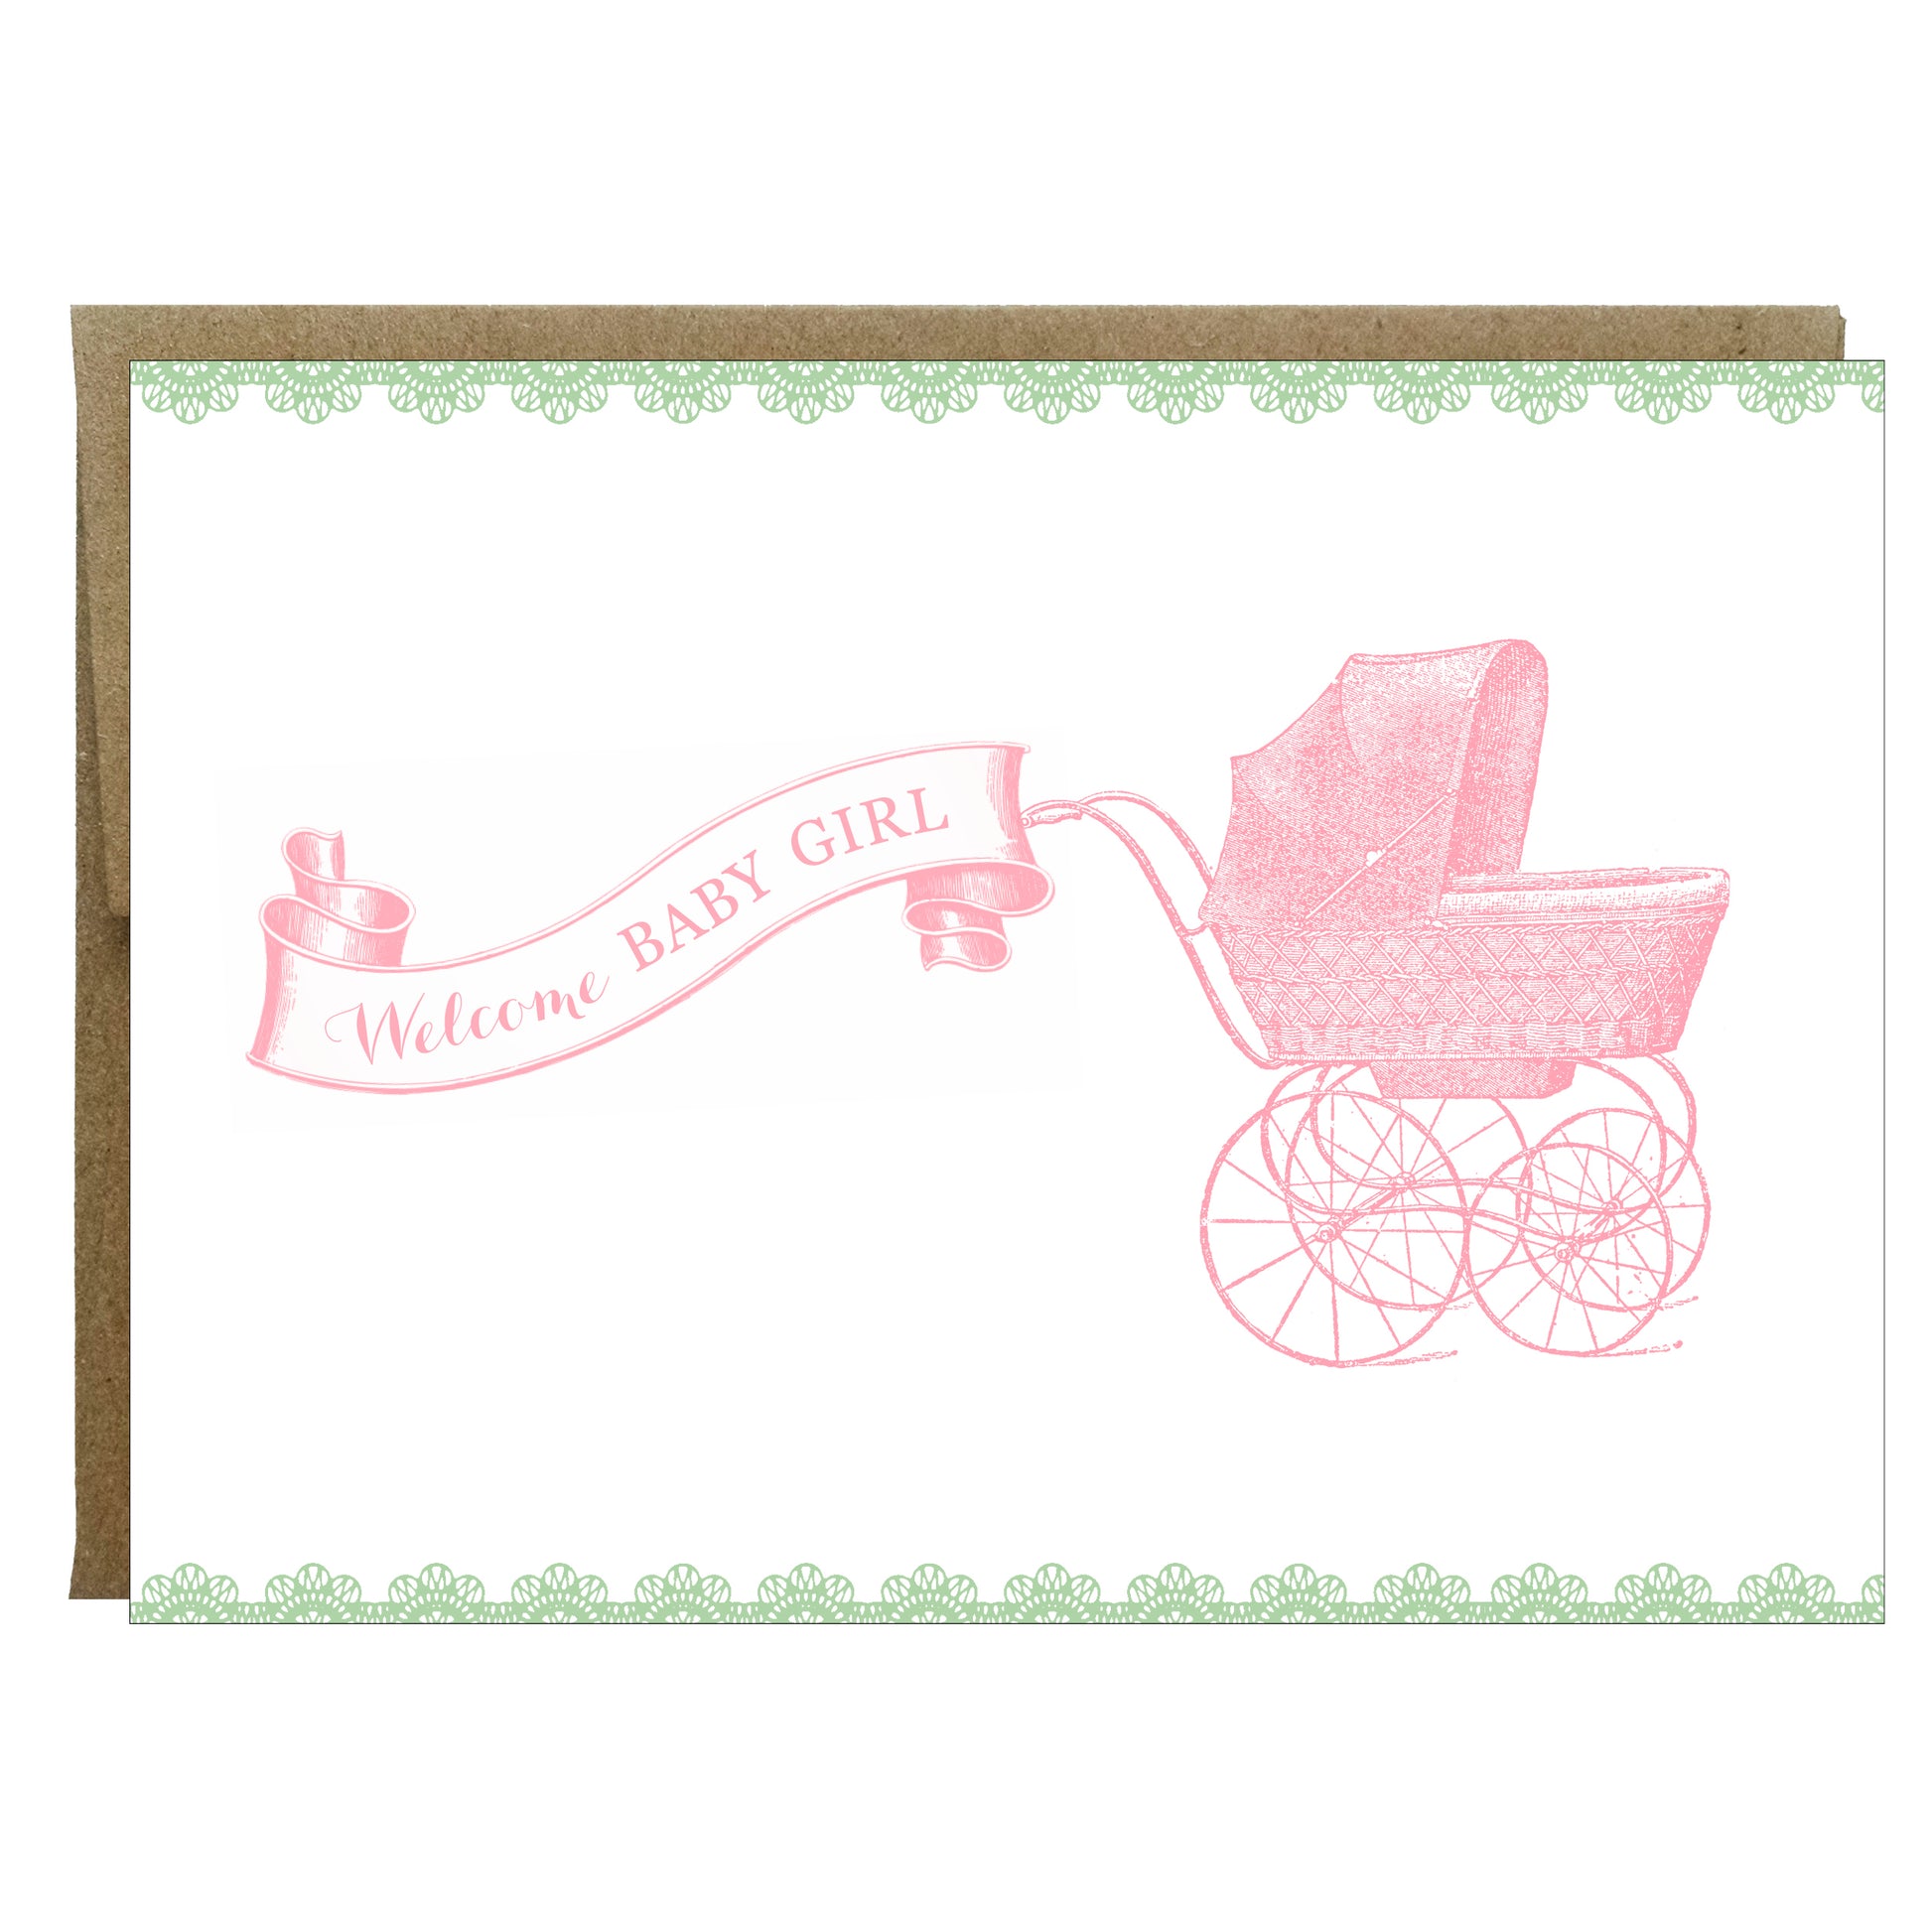 Welcome Baby Girl Vintage Carriage Greeting Card - Idea Chíc